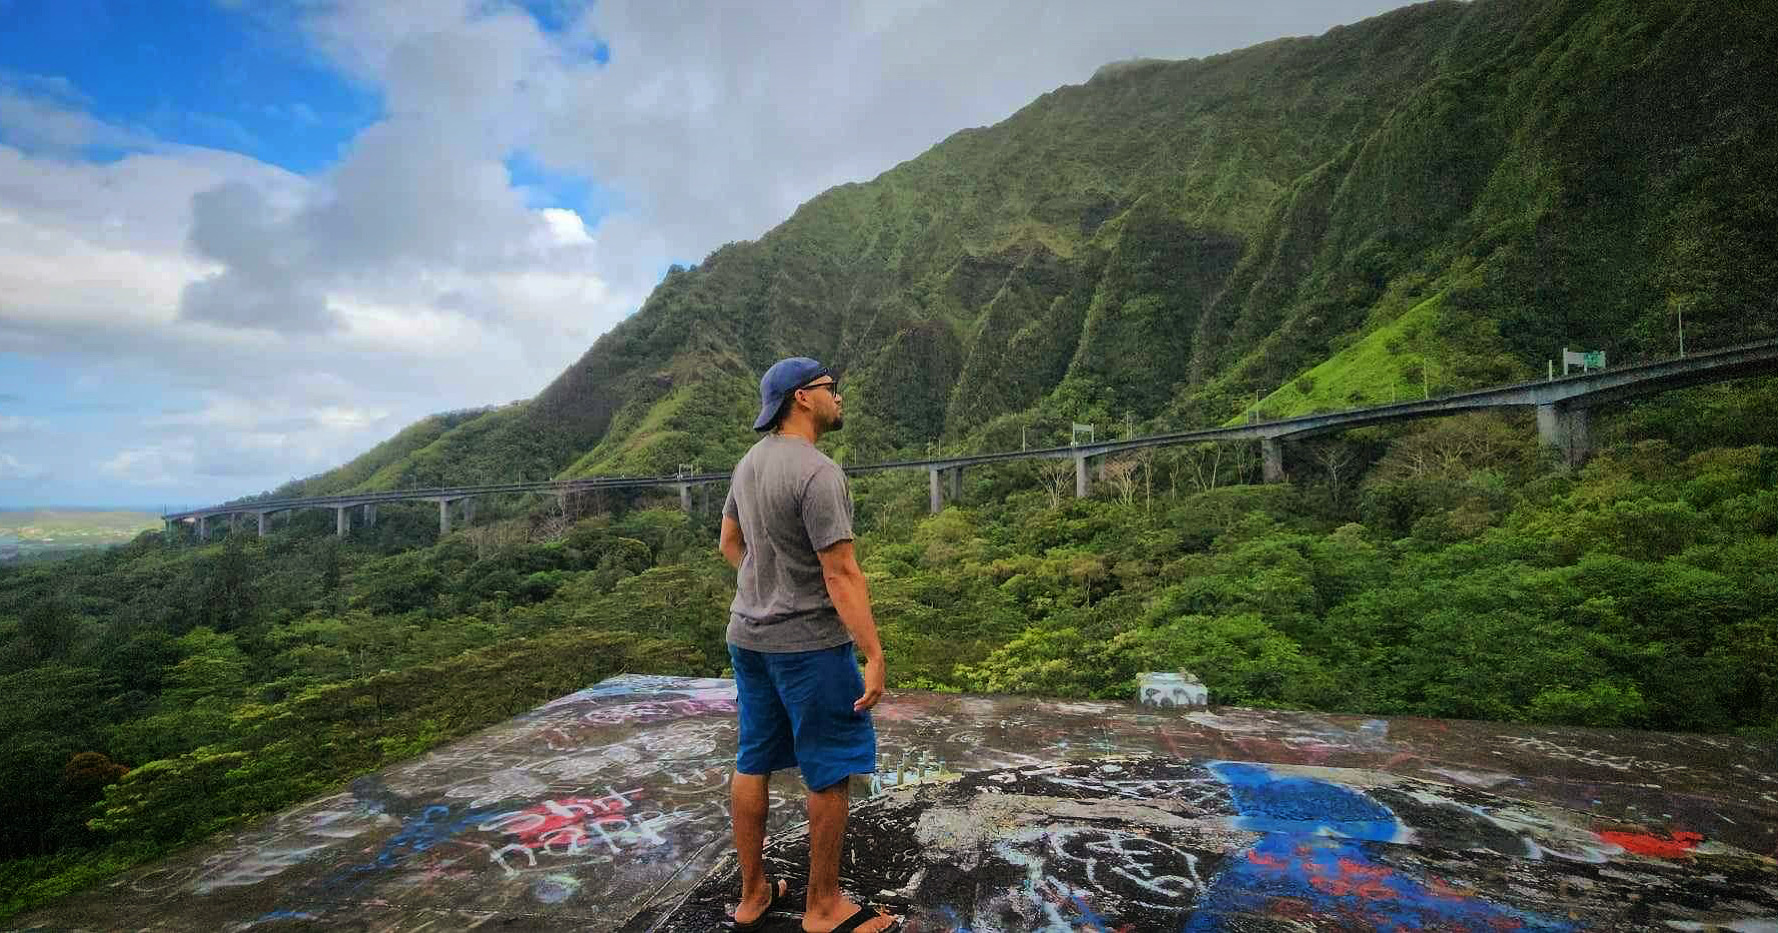 Hawai’i mountains O’ahu with highway haiku valley